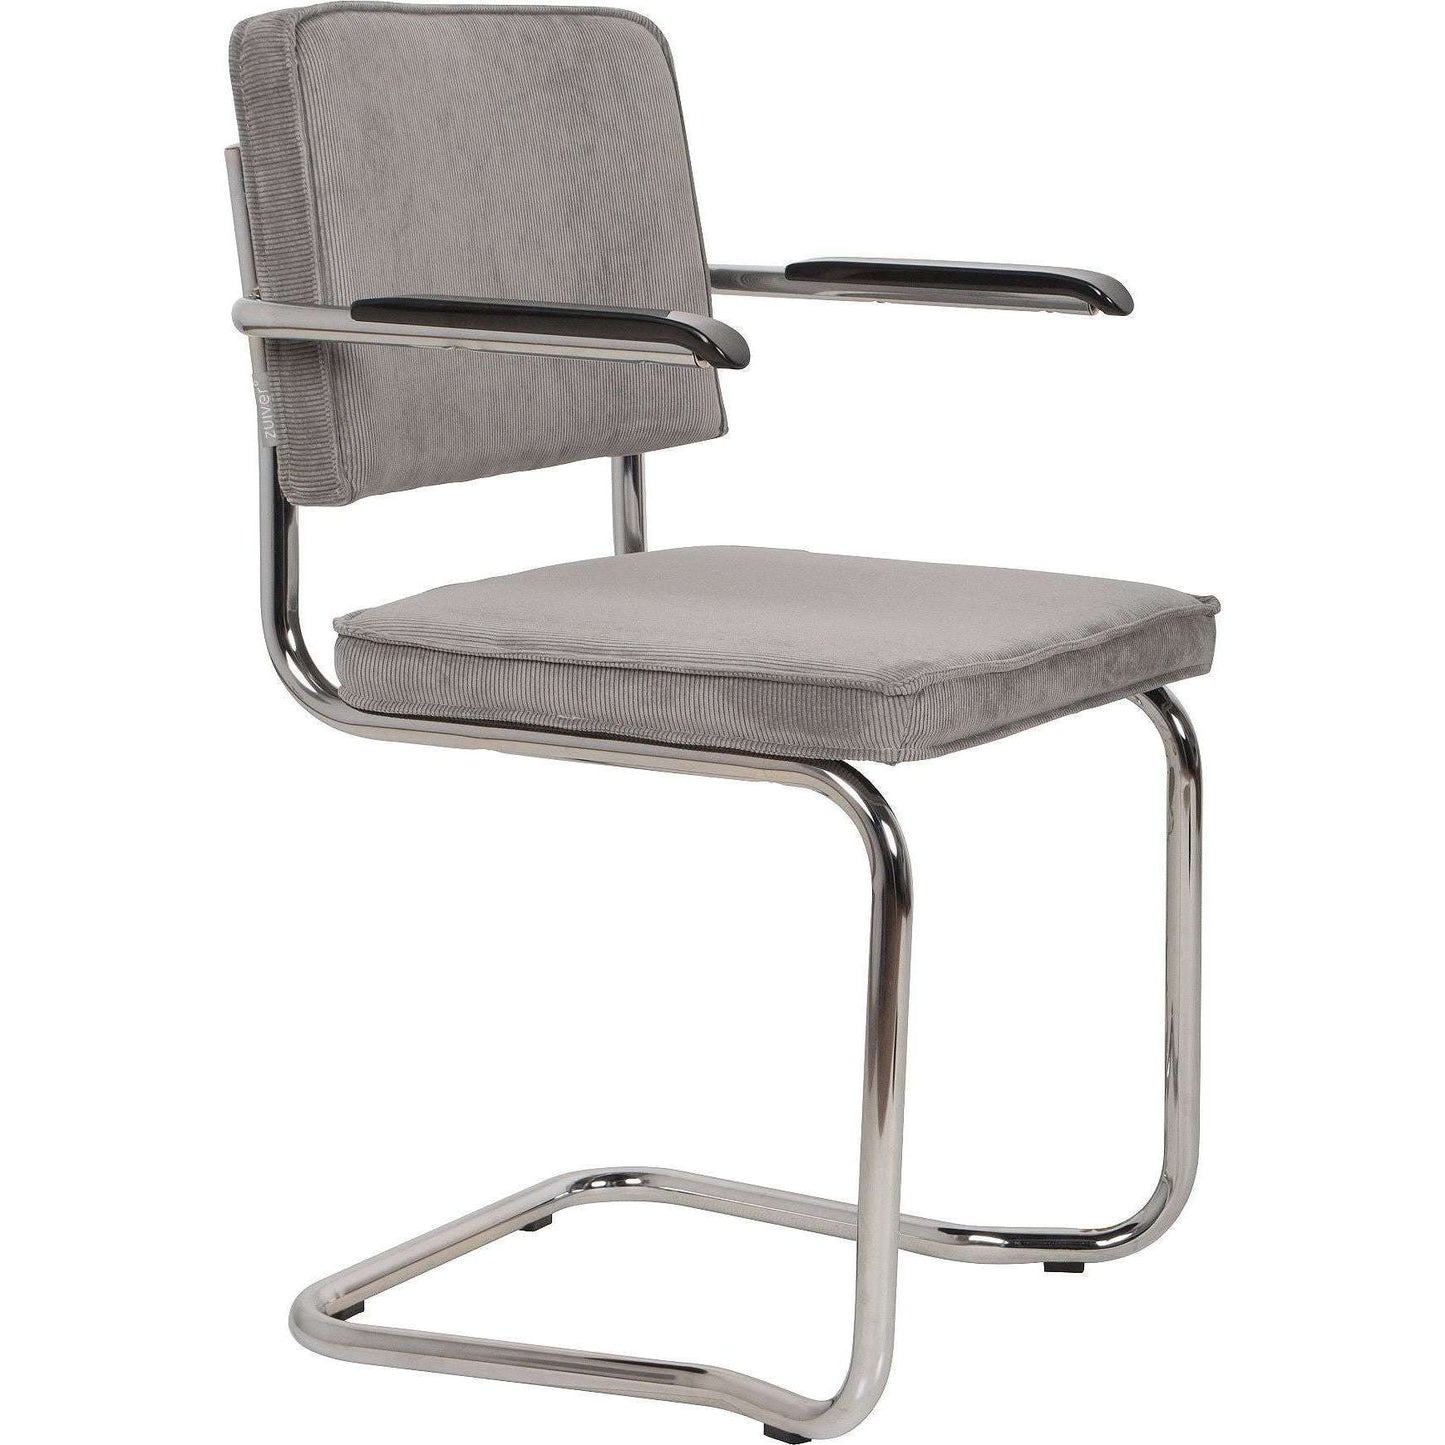 Zuiver stoel met armleuningen ridge kink rib cool grijs 60 x 48 x 85 cm